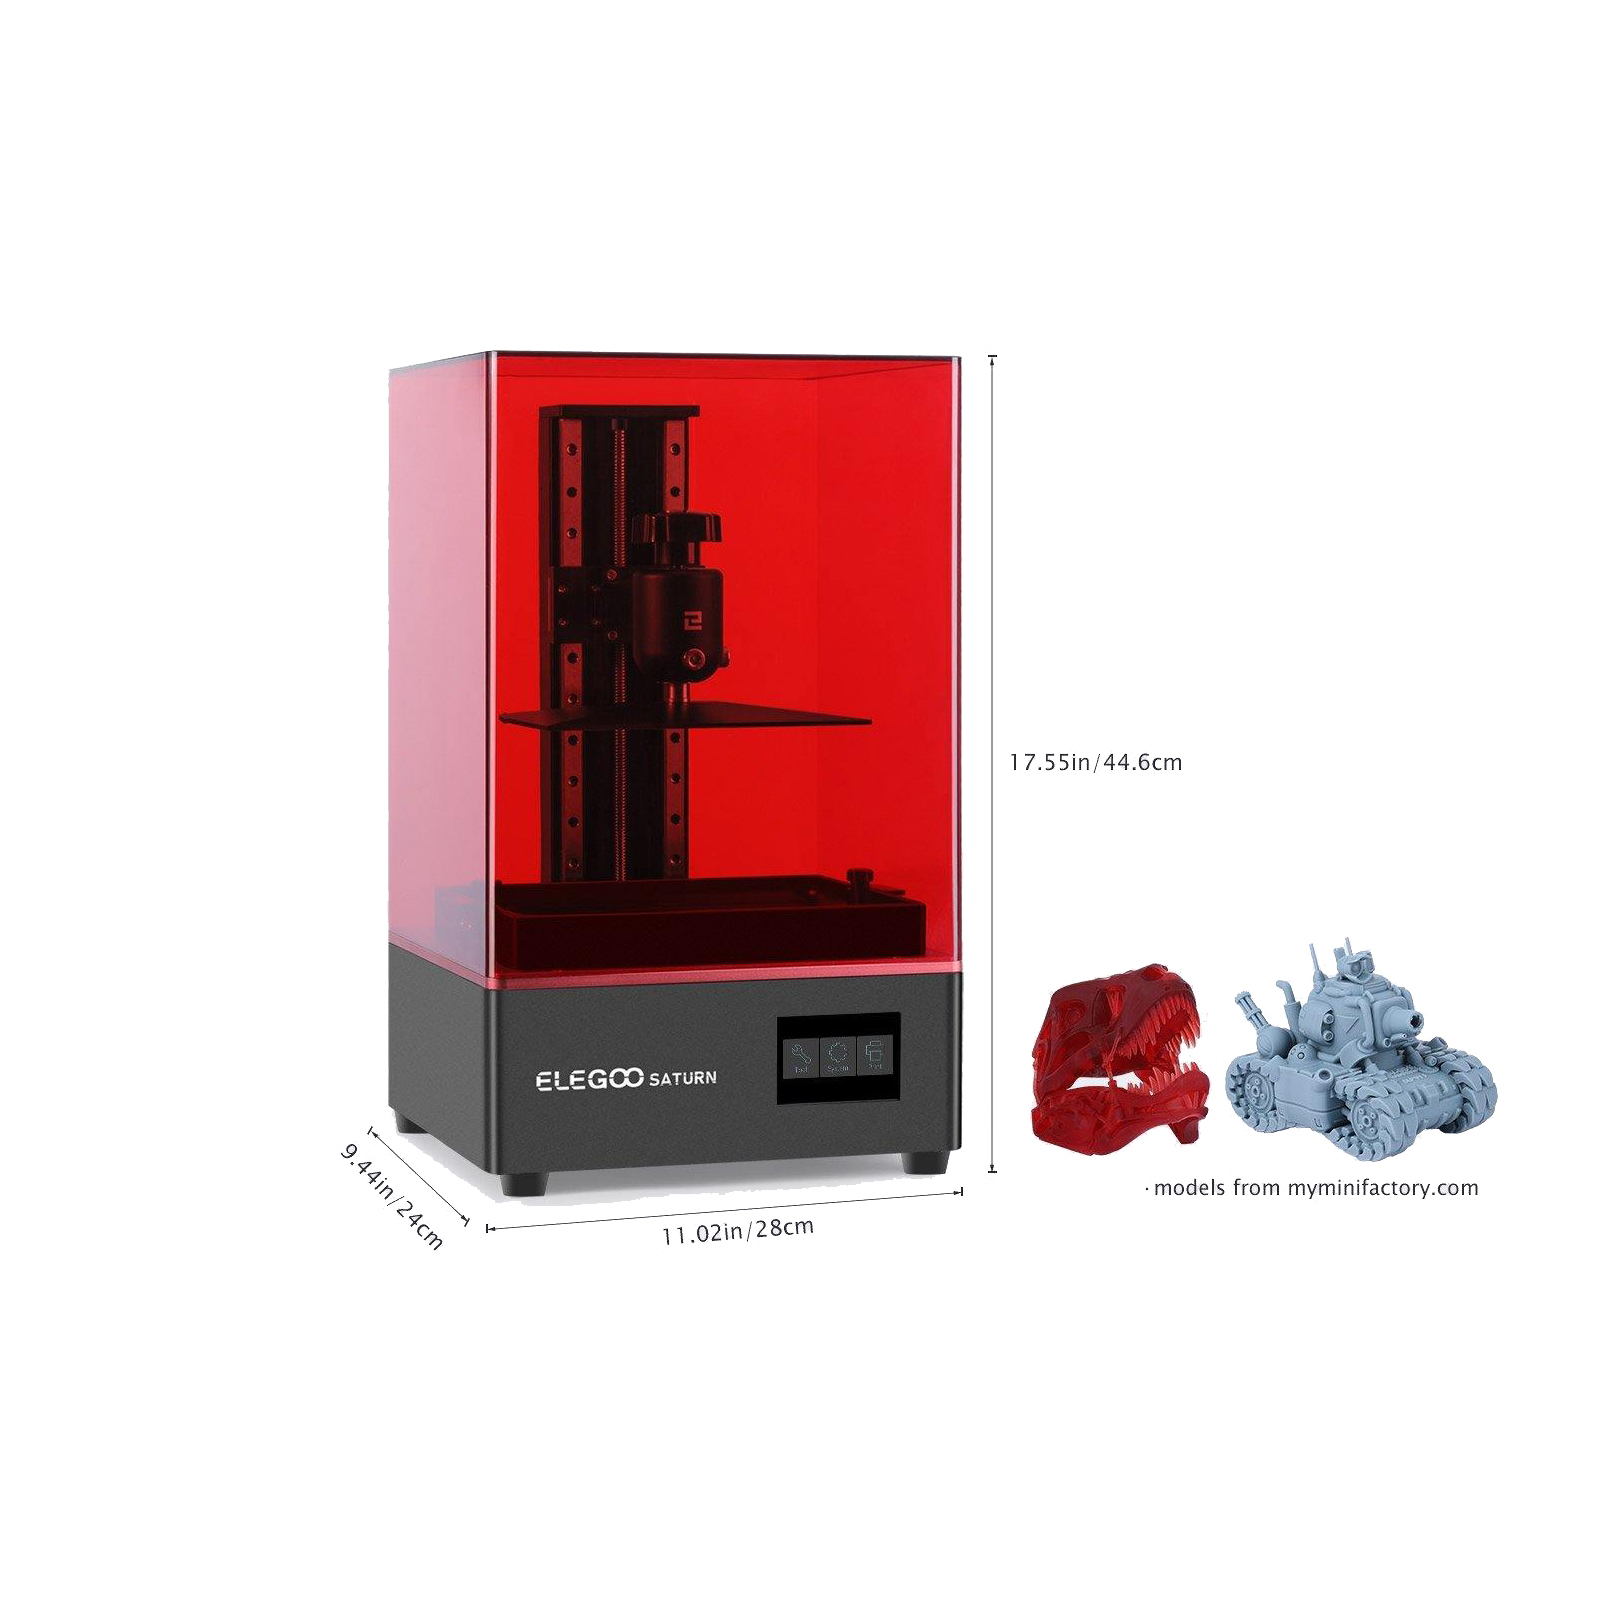 ELEGOOreg-SATURN-MSLA-4K-89quot-MONOCHROME-LCD-Resin-3D-Printer-UV-Photocuring-LCD-Resin-3D-Printer--1825672